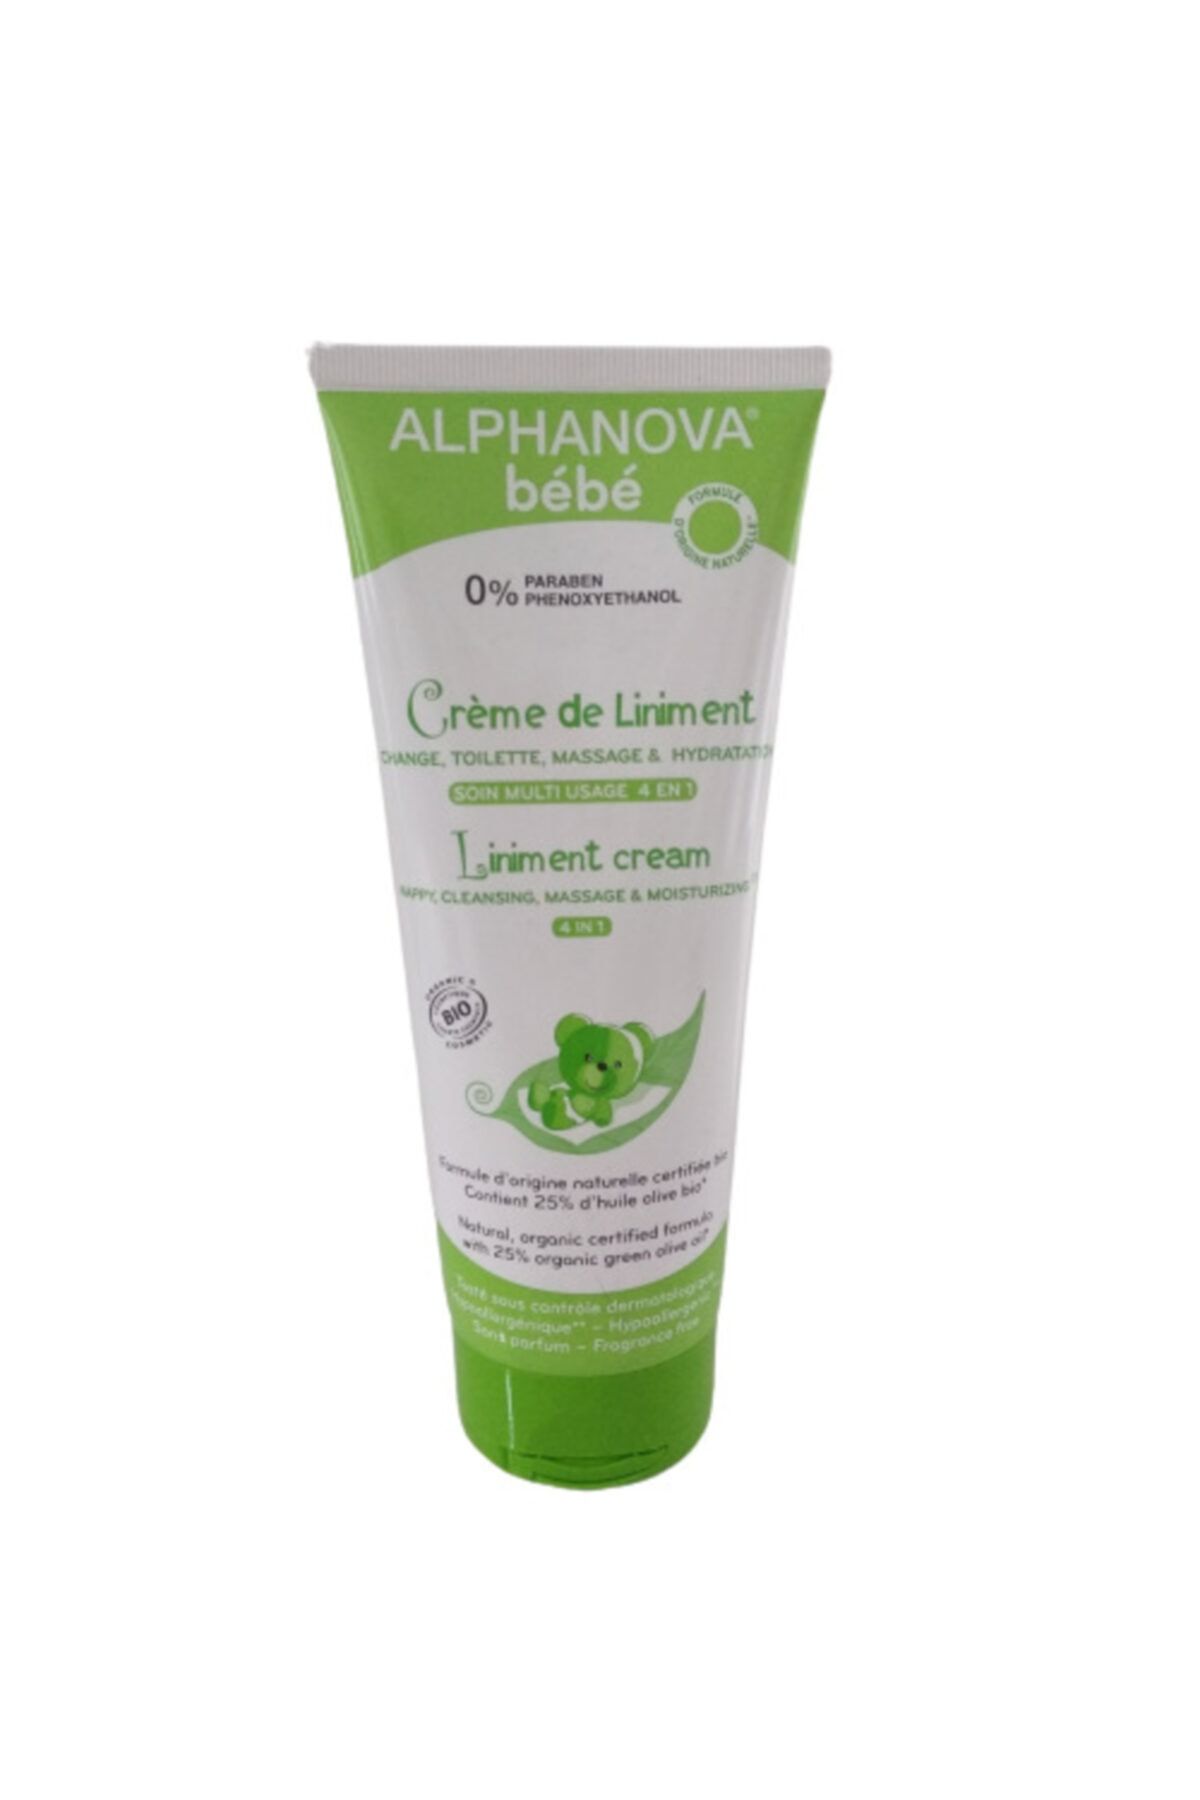 Alphanova Organik Bebe Cream De Liniment -nappy, Cleansing, Massage, Moisturizing -4 In 1- 200ml Yeni Ürün